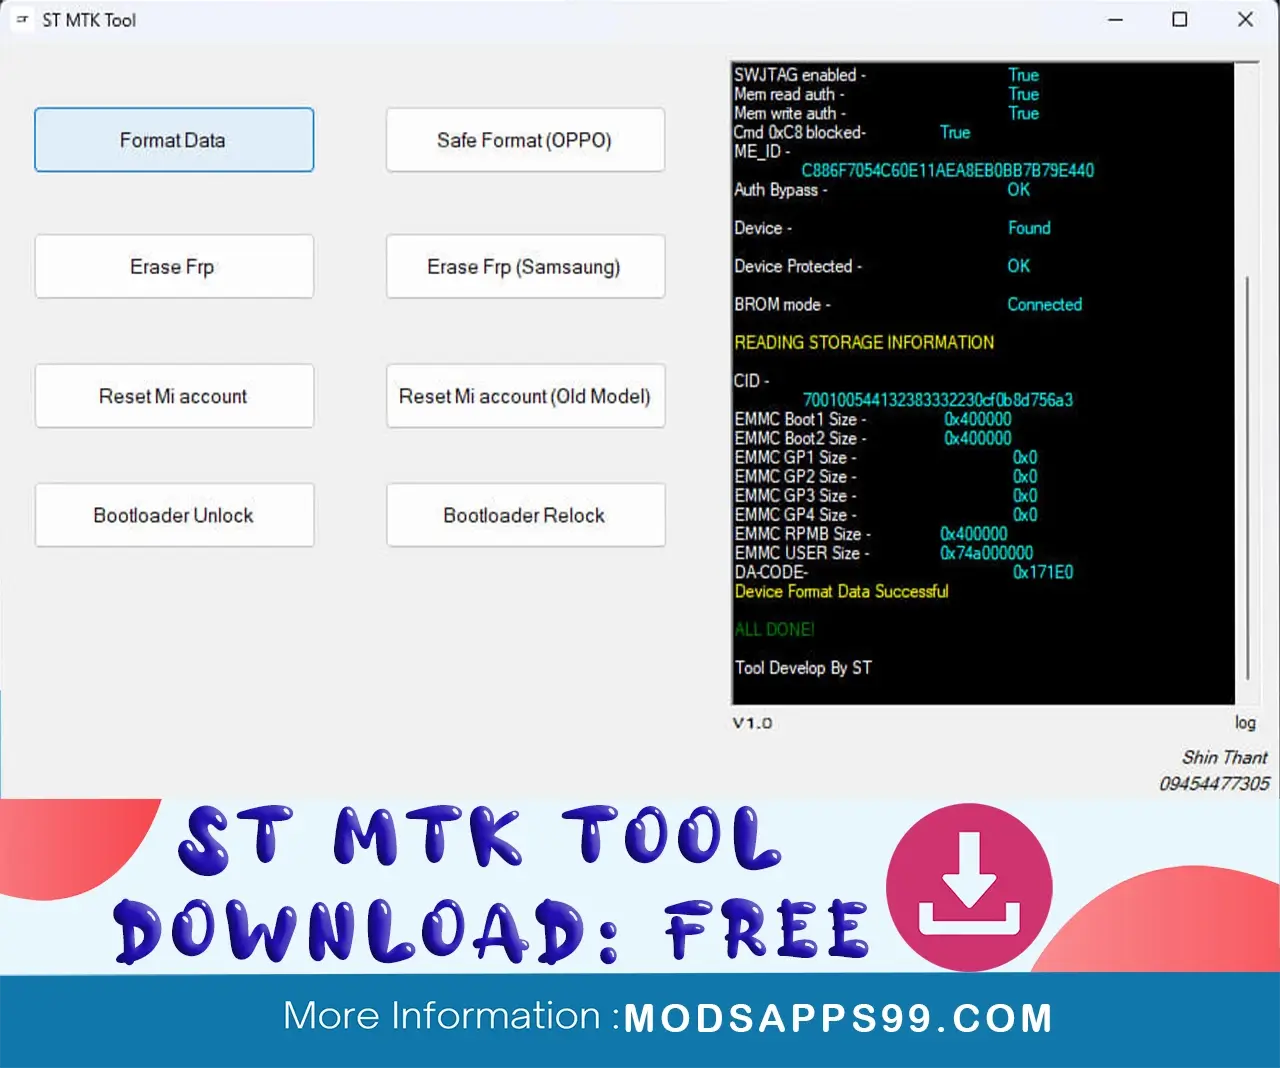 ST MTK Tool Download: Free Format Data, Erase FRP, Mi Account Reset, Bootloader Unlock/Relock Guide